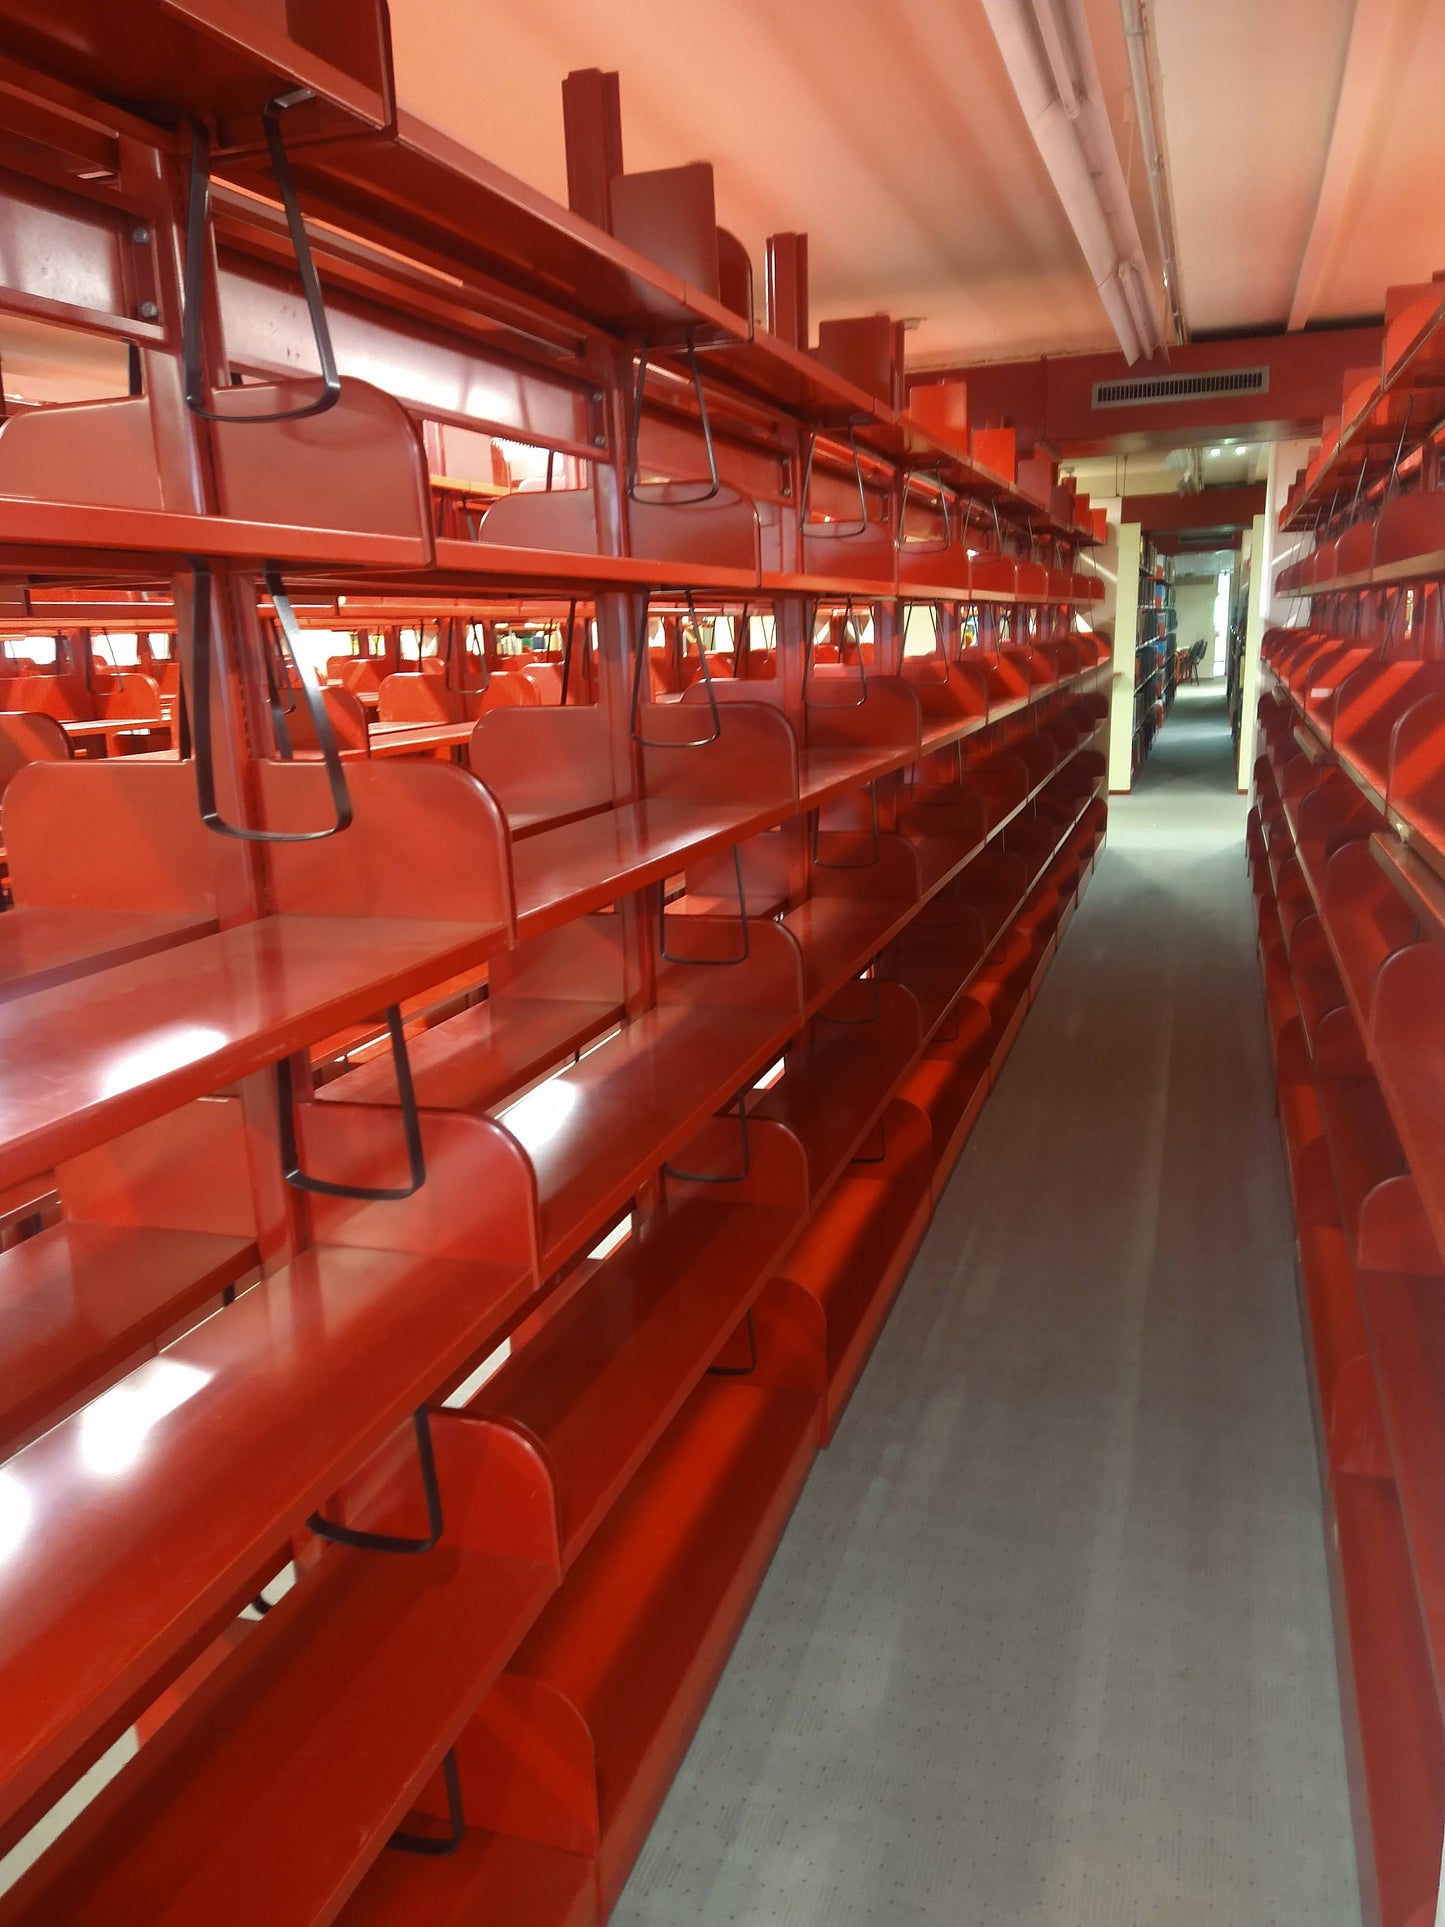 Rotes/Graues modulares Bibliotheksregal, Höhe: 2170 mm